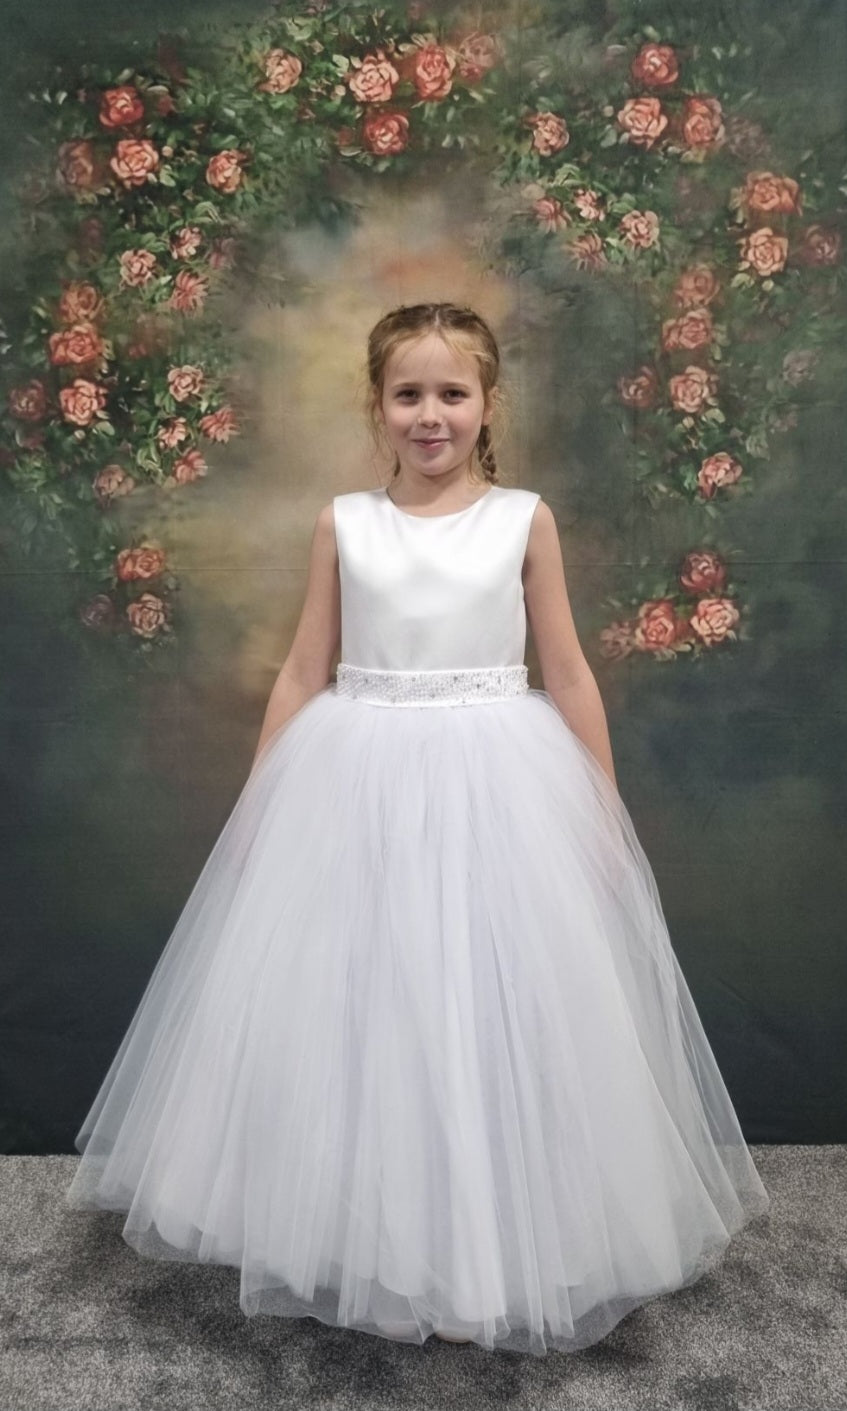 SALE COMMUNION DRESS Celebrations Girls White Communion Dress:- Willow With Cap Sleeve Age 7 & 9